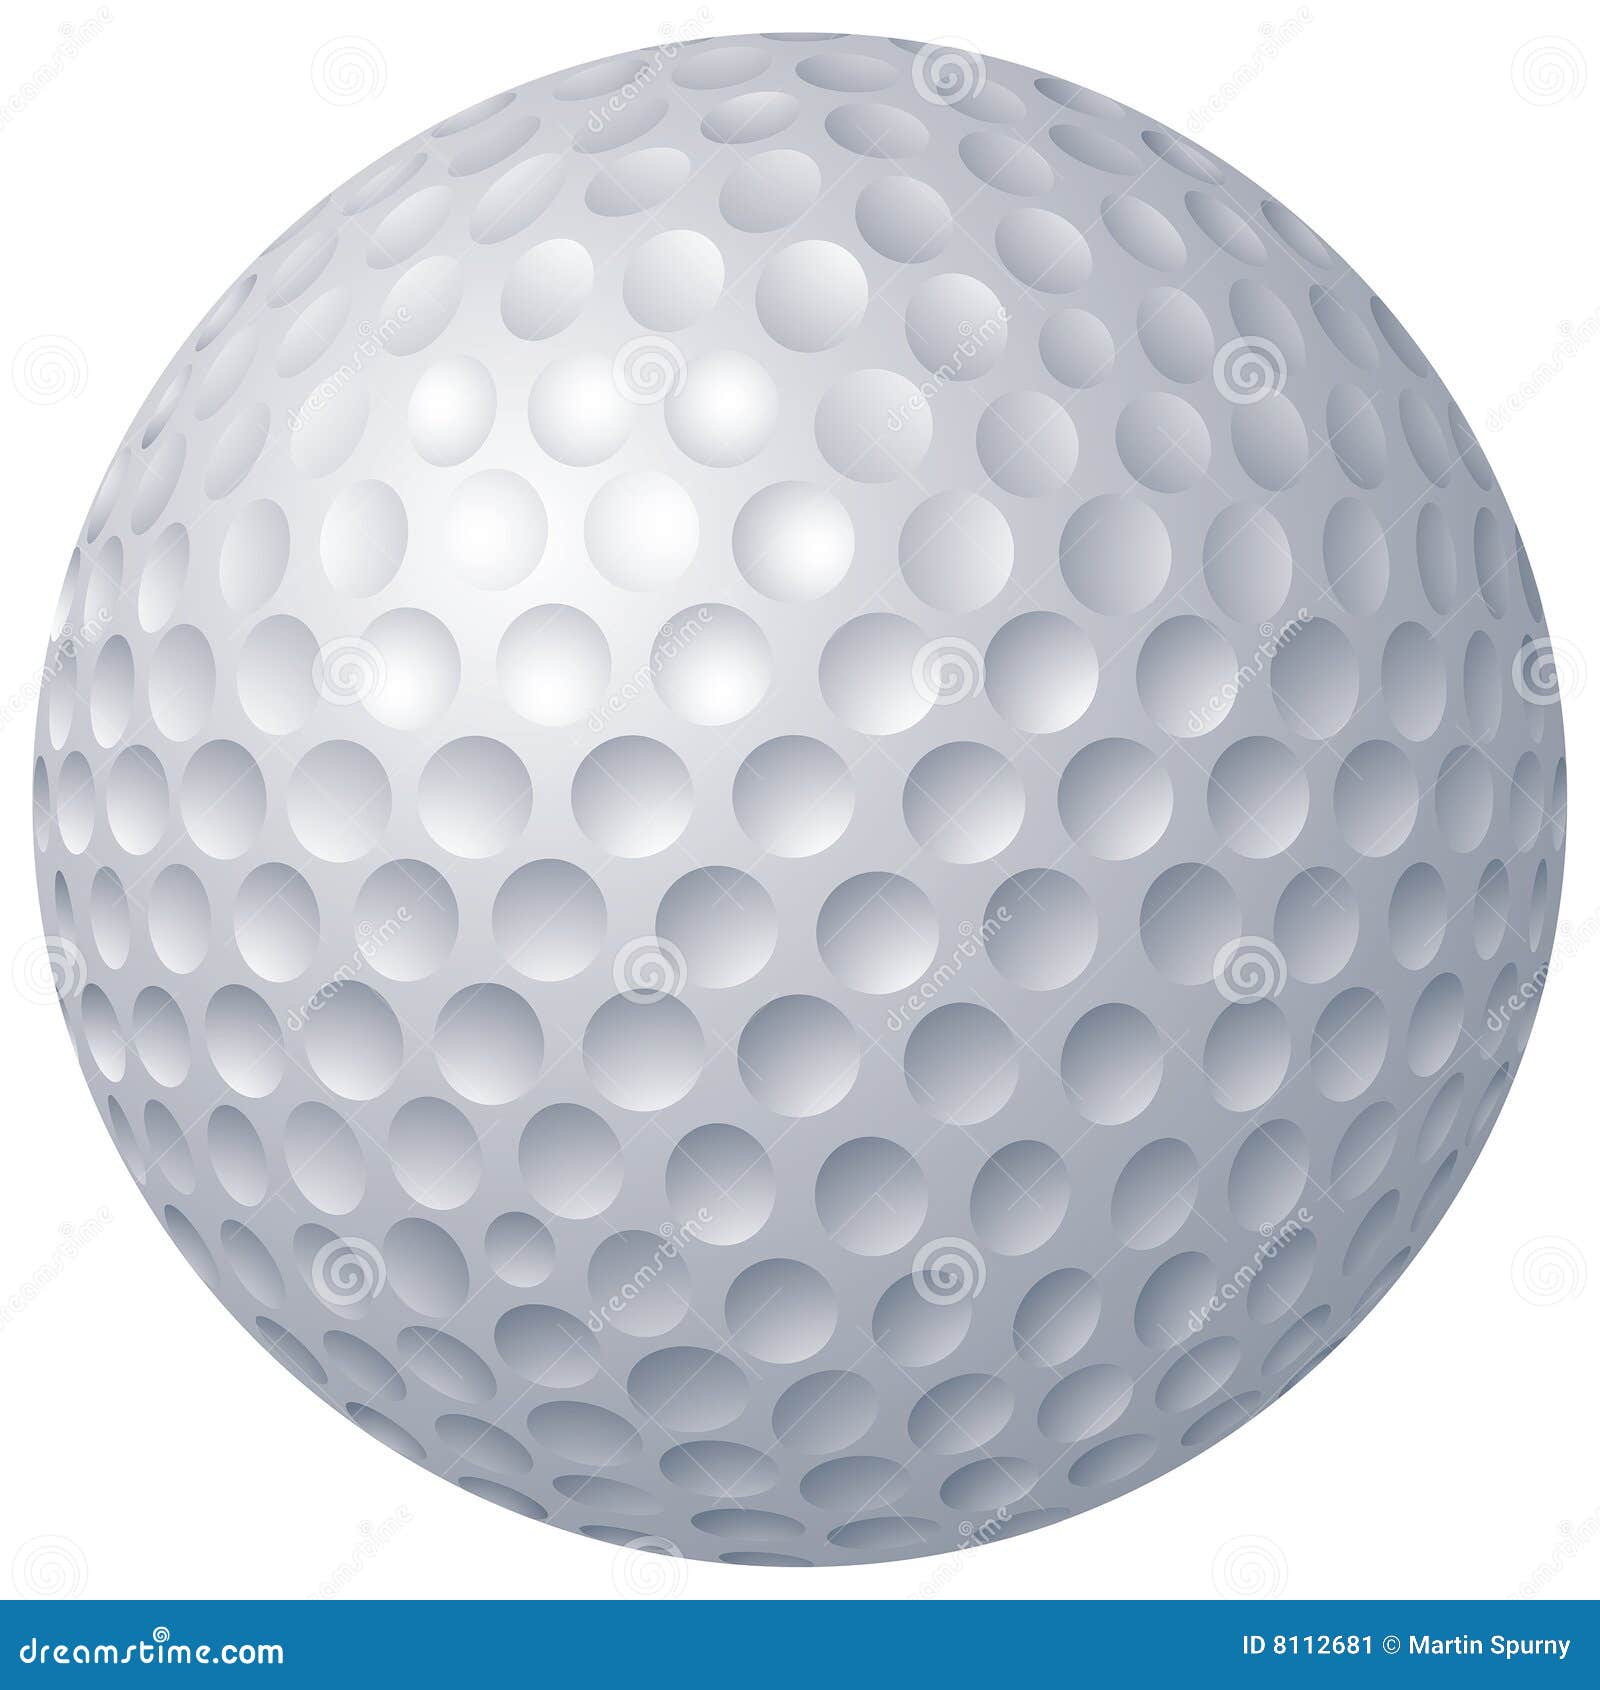 golf ball images clip art - photo #46